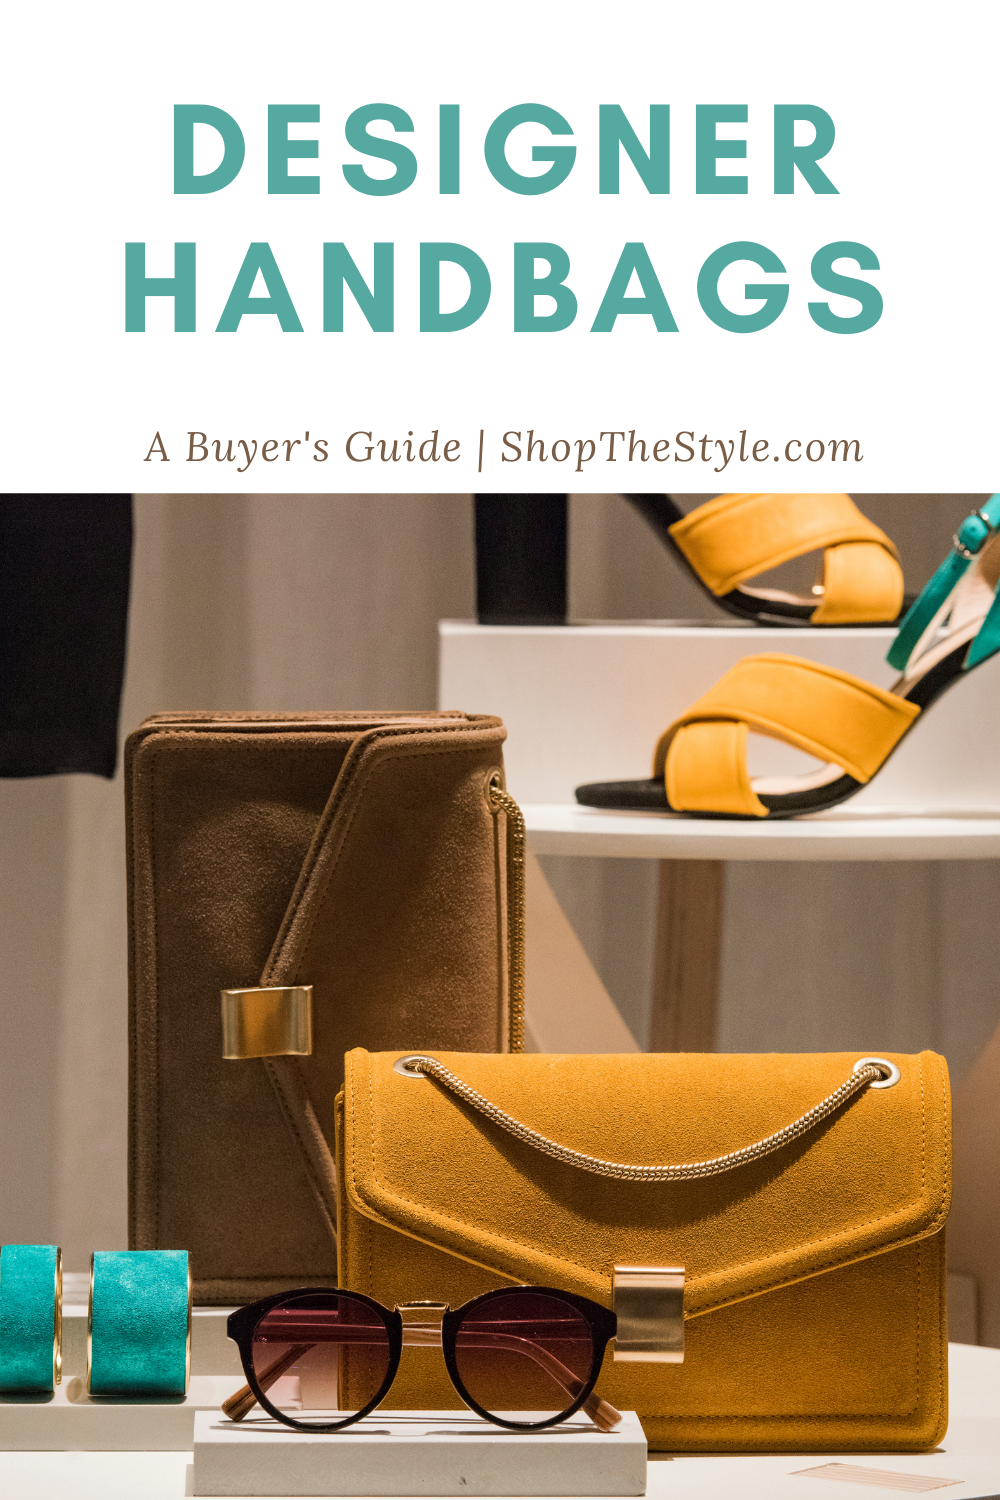 A Buyer’s Guide To Designer Handbags